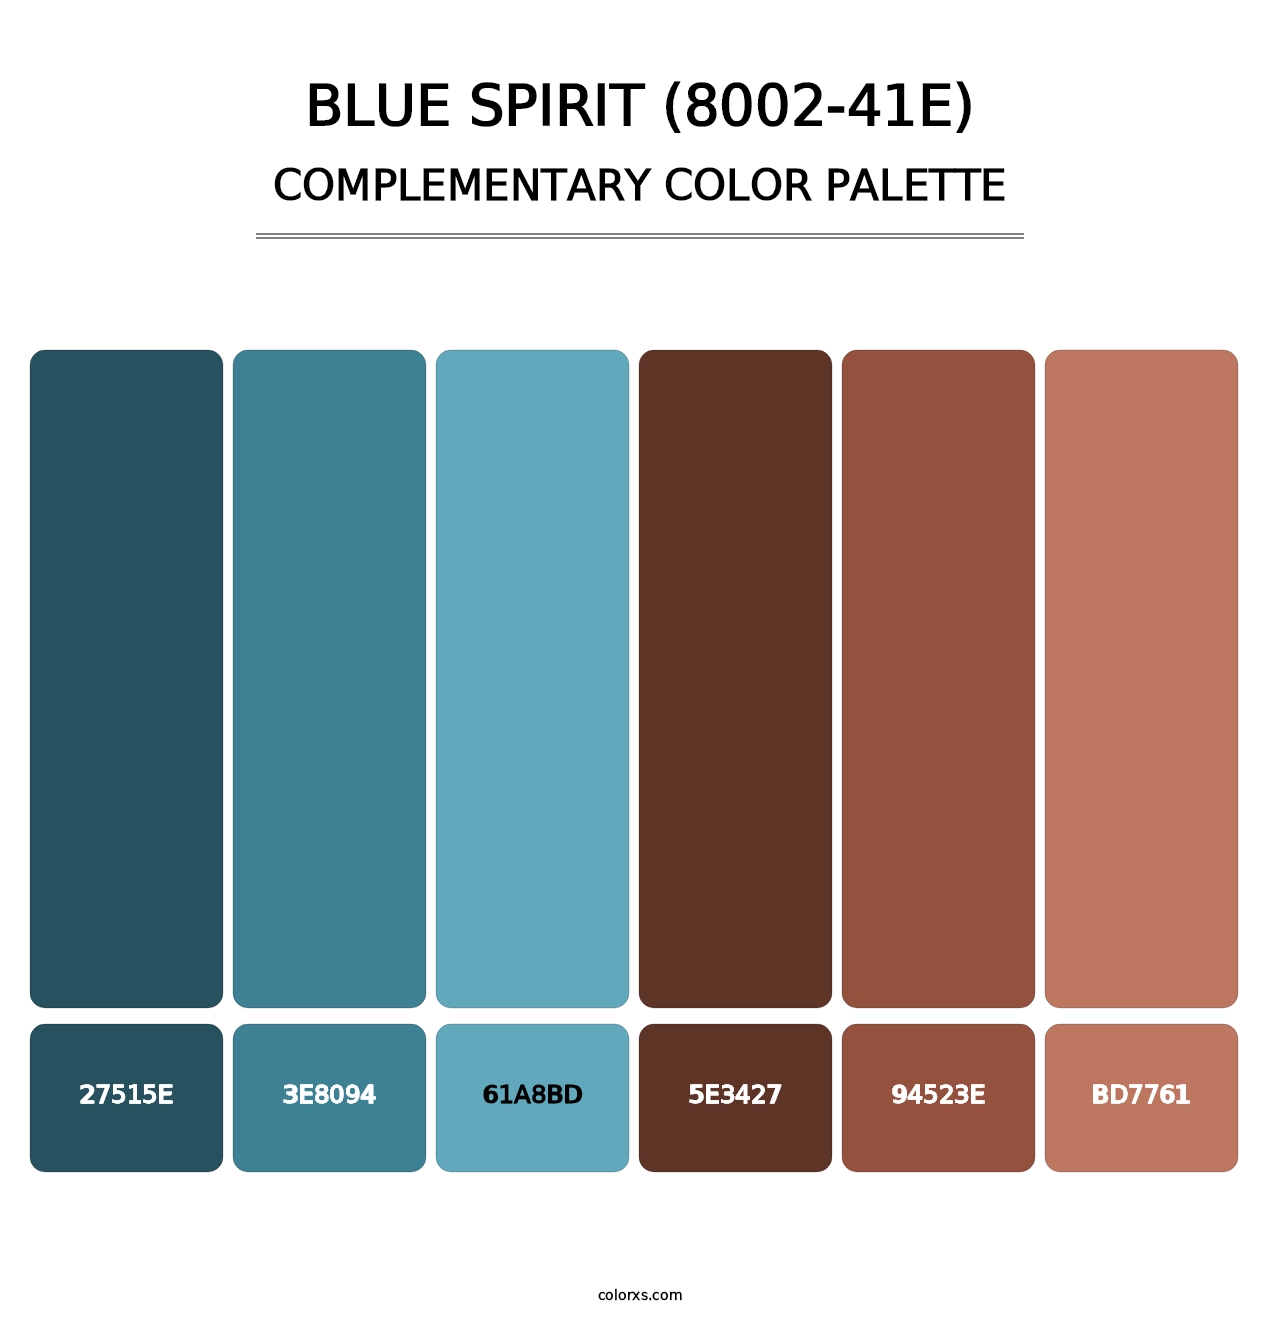 Blue Spirit (8002-41E) - Complementary Color Palette